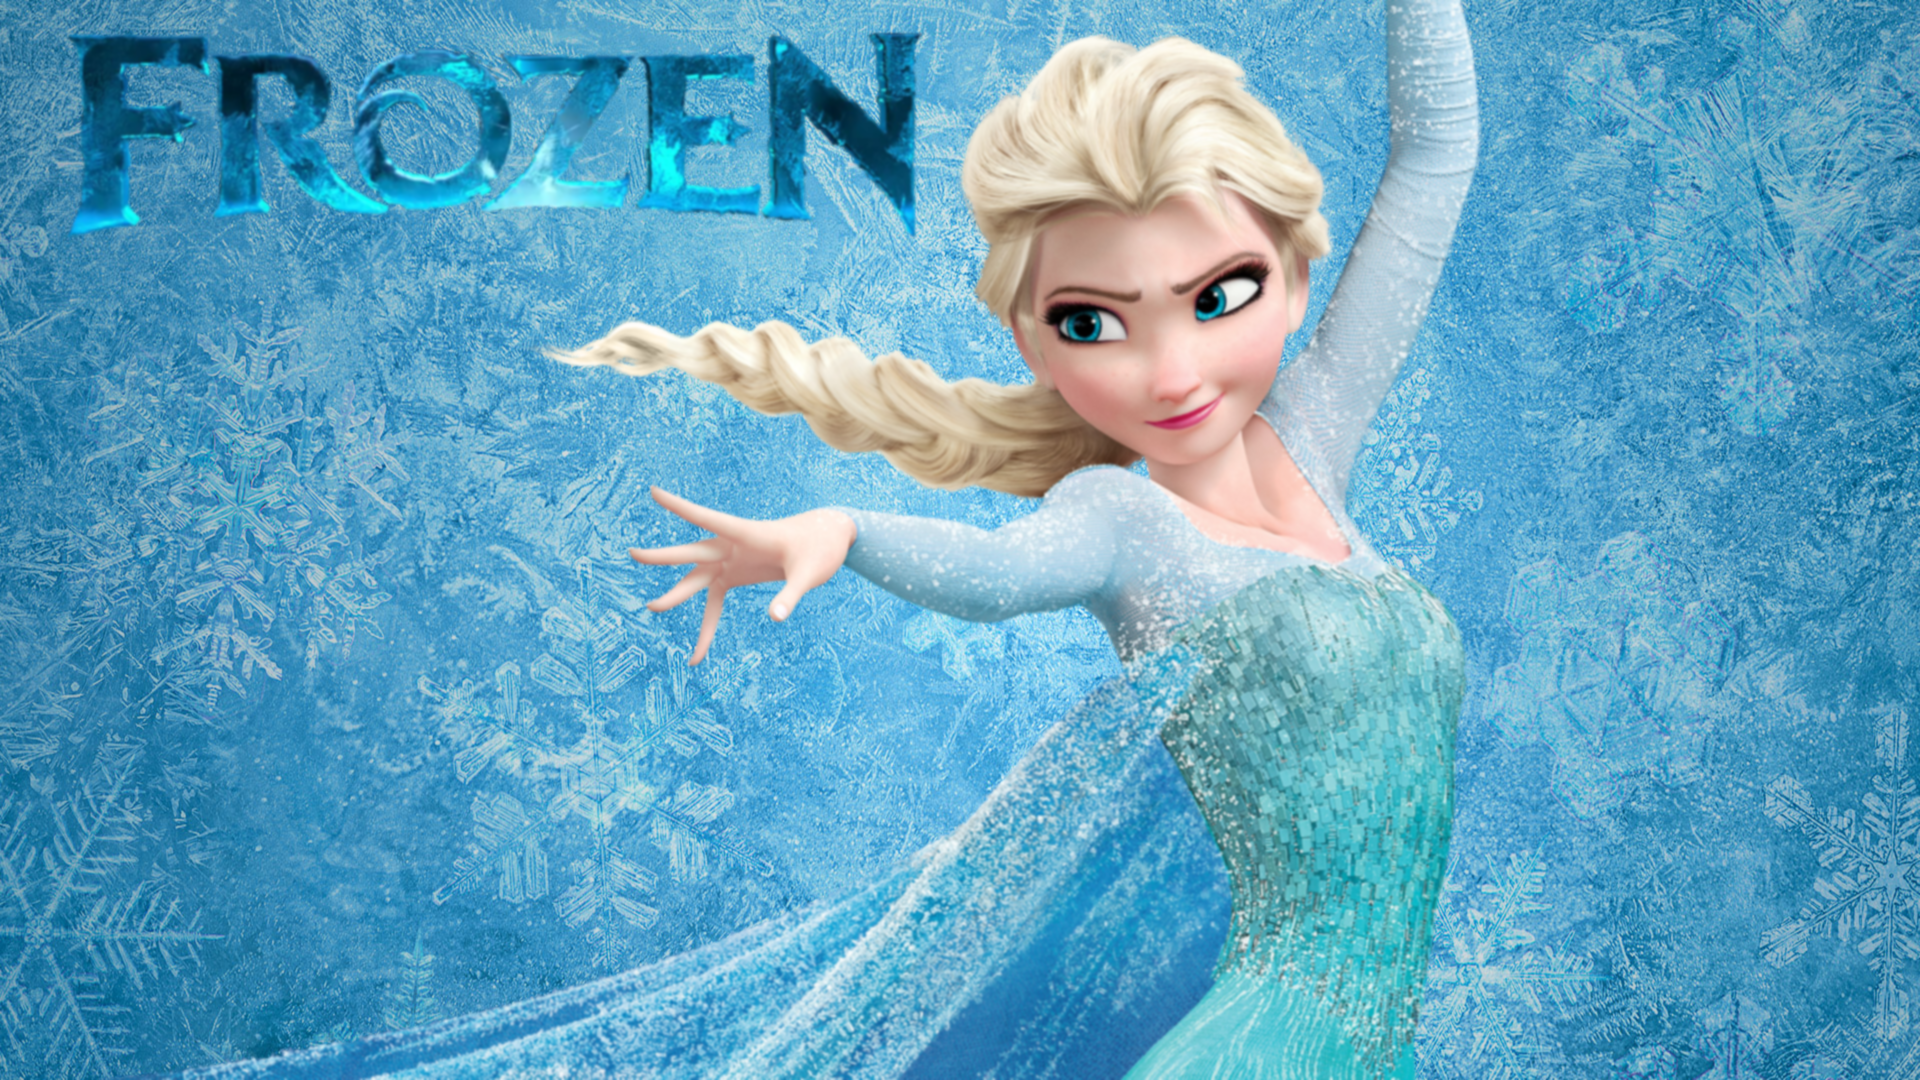 HD Frozen: Elsa Wallpaper 1920x1080 by robotthunder500 on DeviantArt